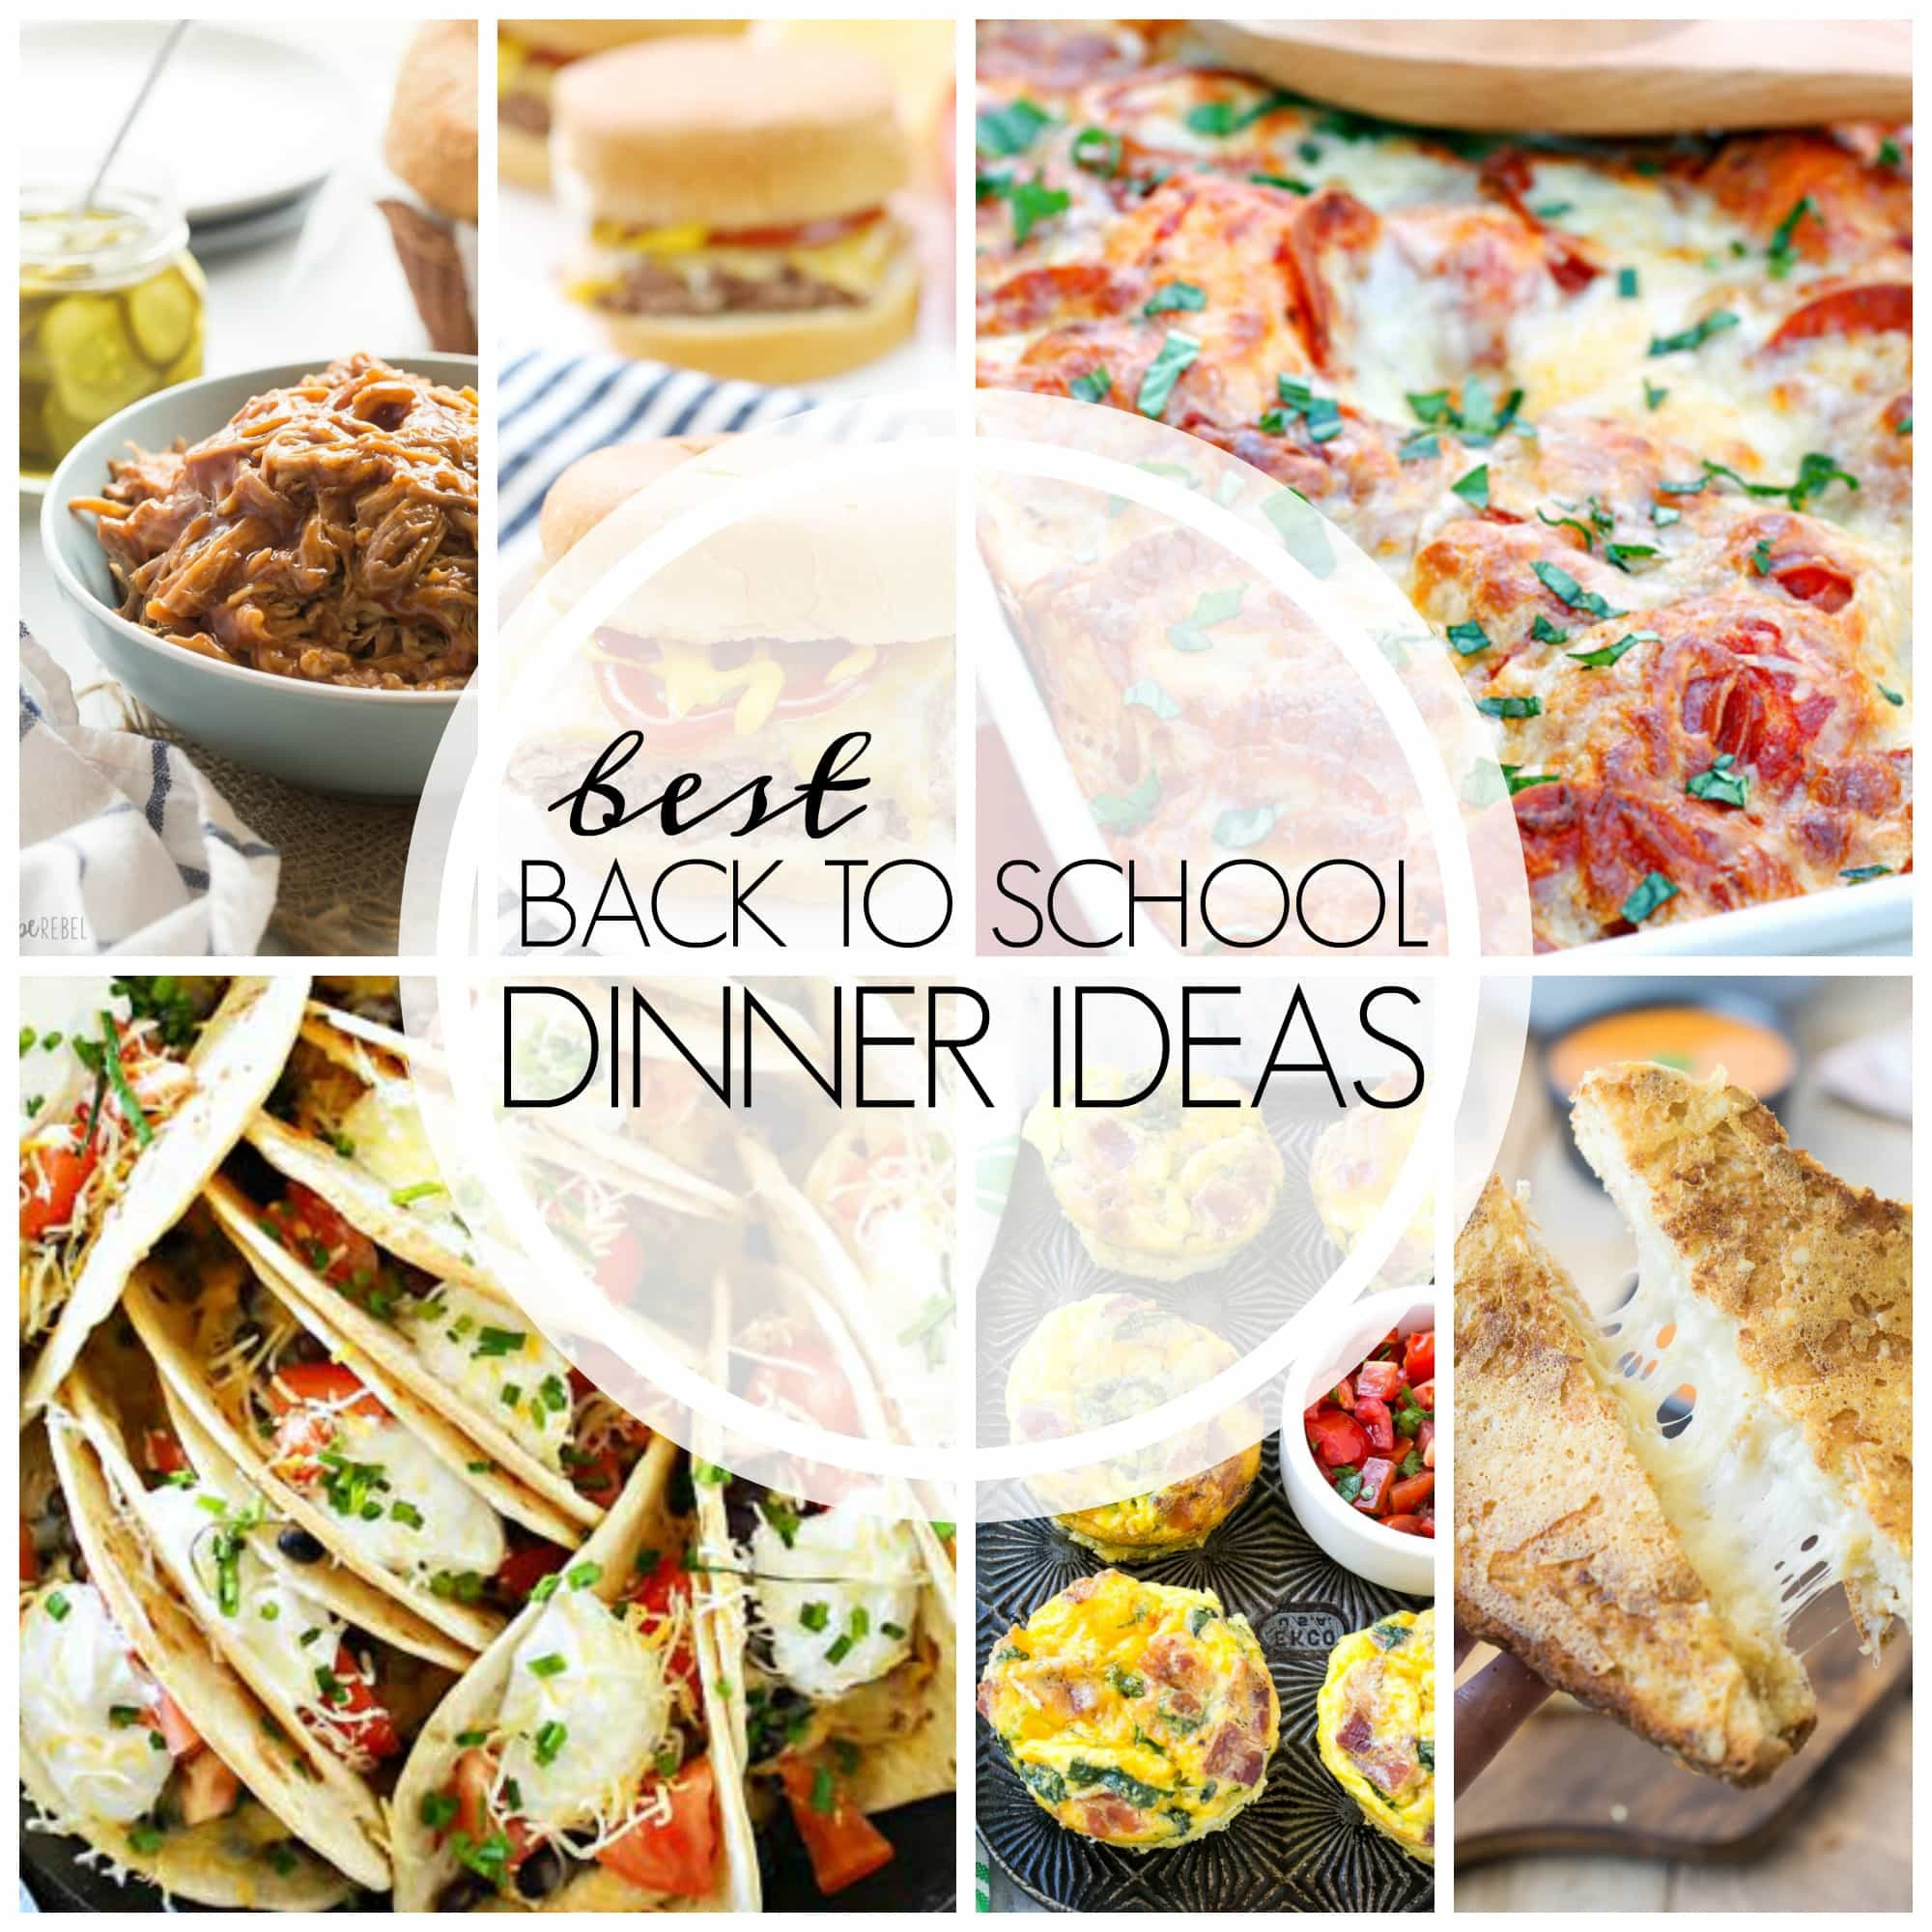 Dinner Recipes Ideas
 Easy Dinner Recipes 20 Family Friendly Ideas